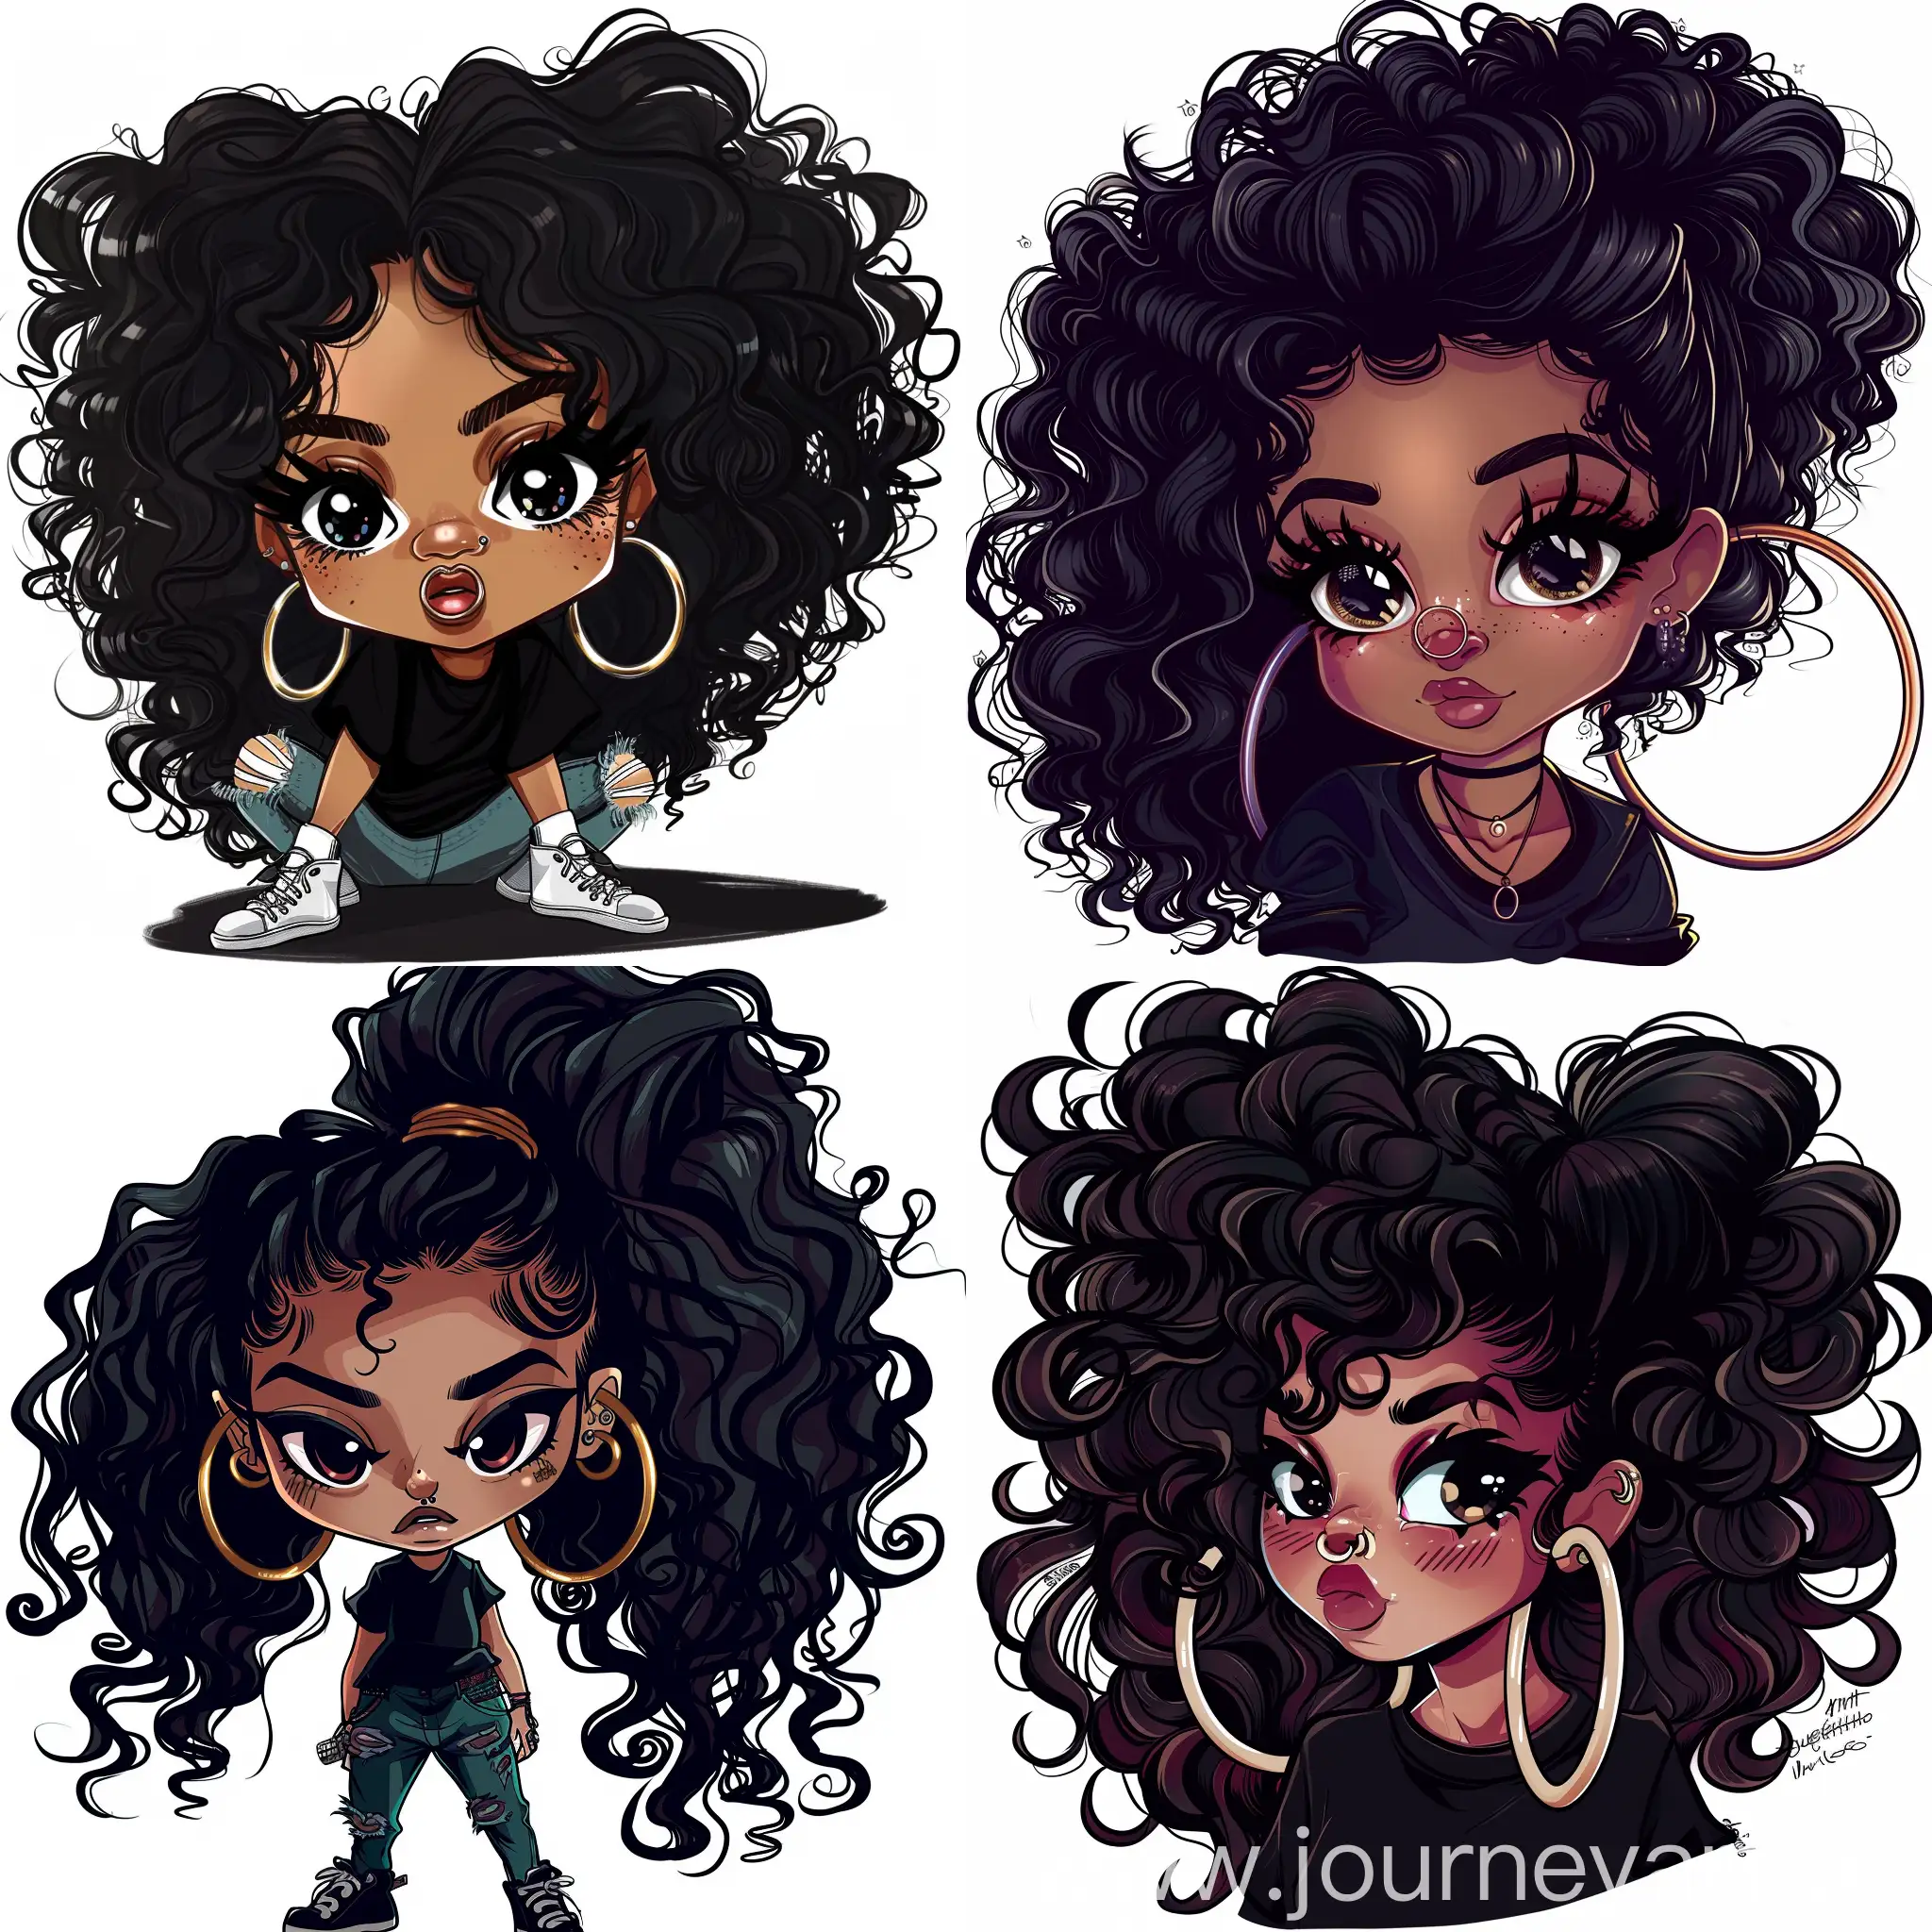 Chibi-Boho-Black-Girl-Superhero-with-Afro-Hair-Illustration